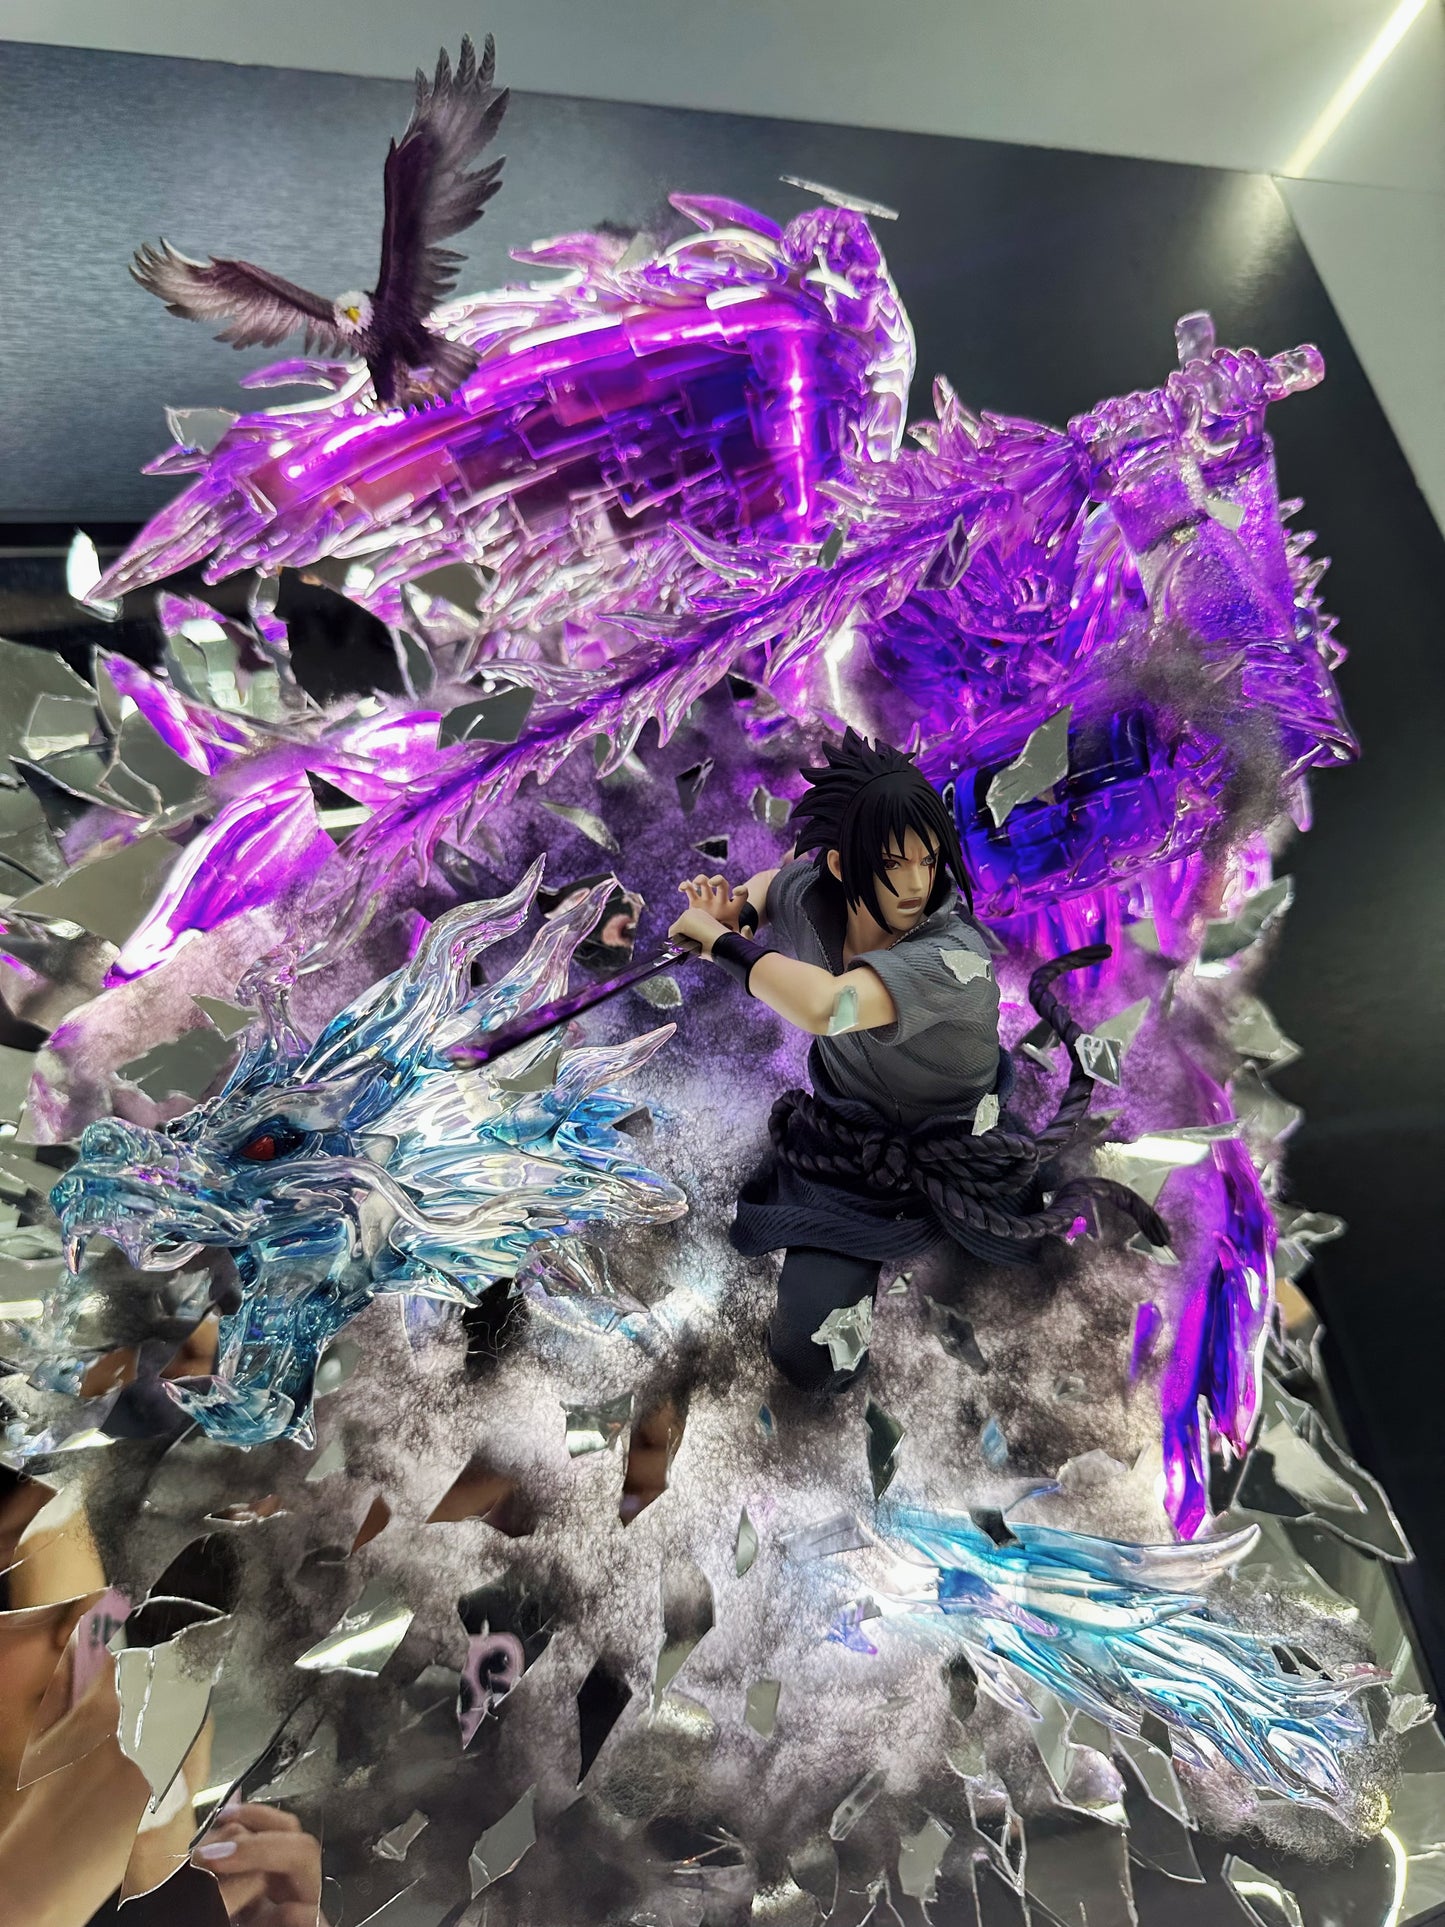 Sasuke with susanoo fight from broken mirror 50*60